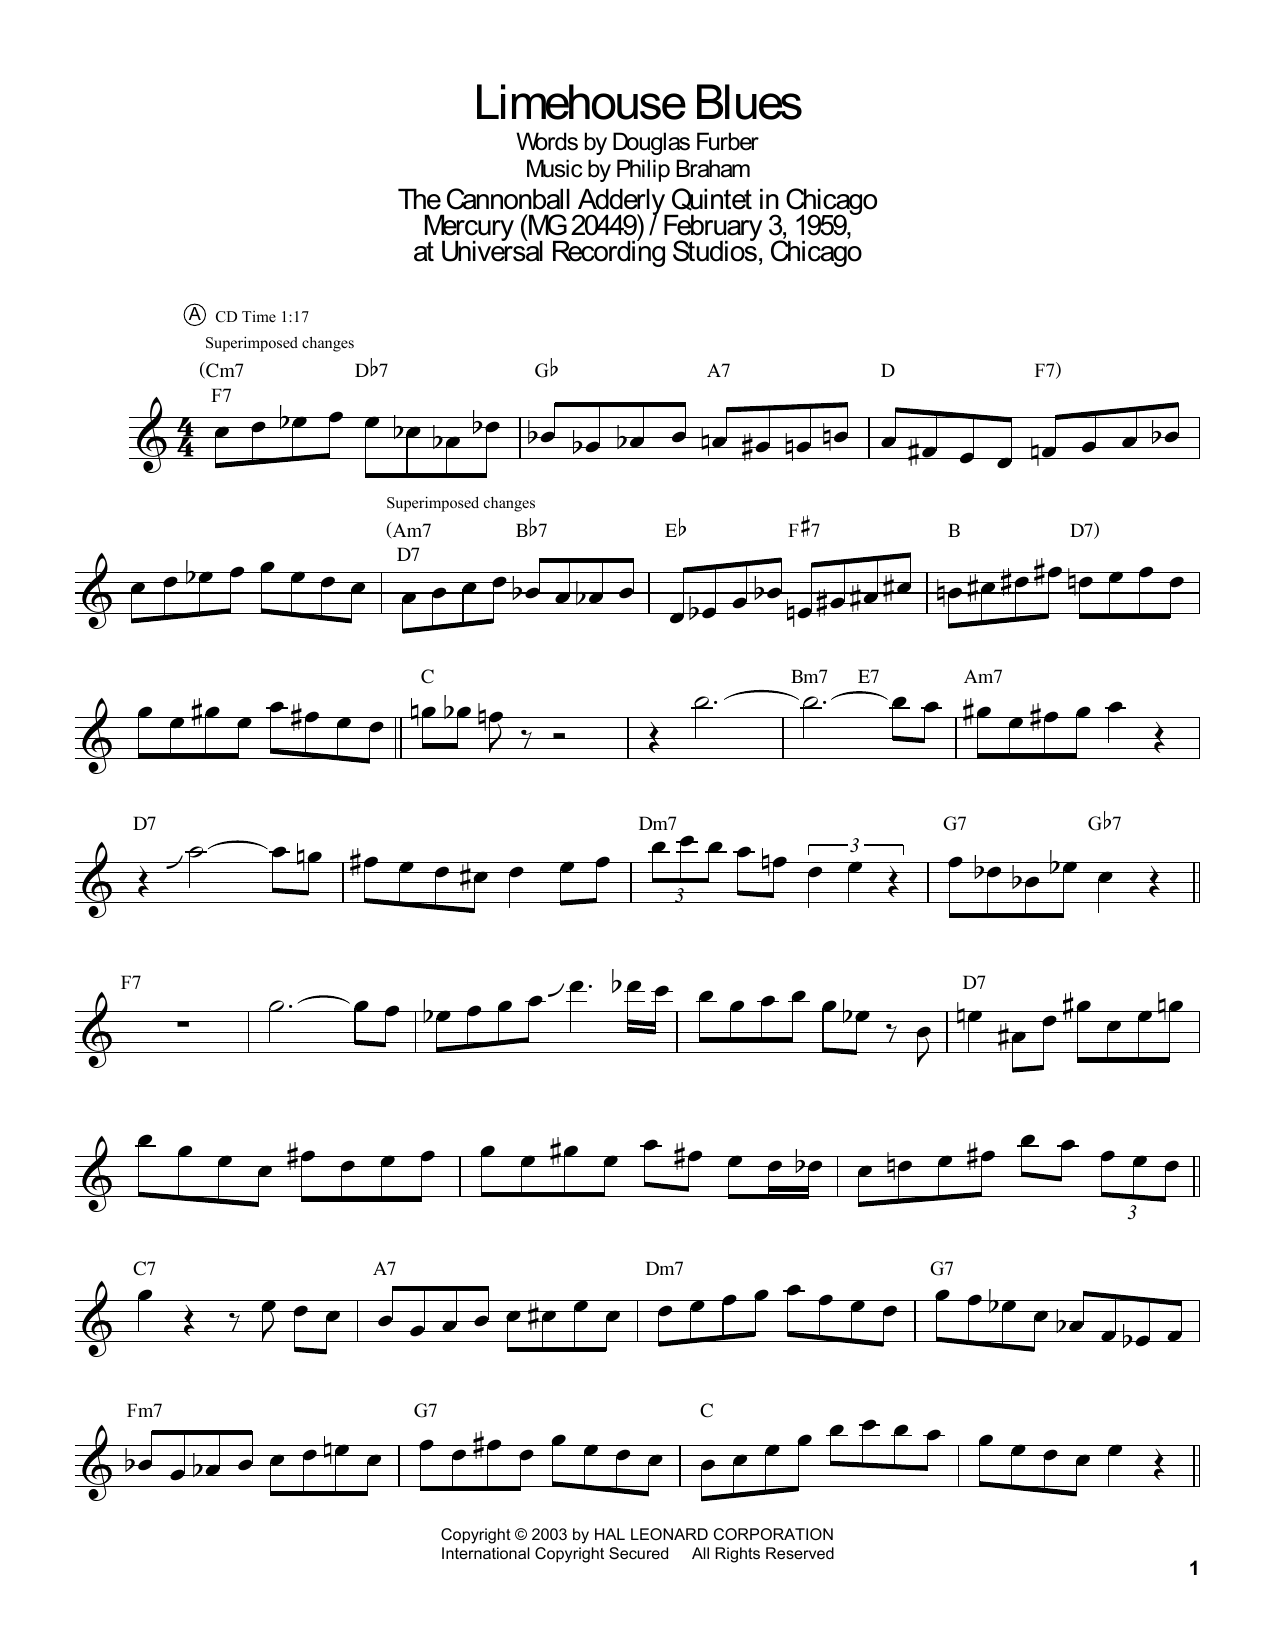 John Coltrane Limehouse Blues Sheet Music Notes & Chords for Tenor Sax Transcription - Download or Print PDF